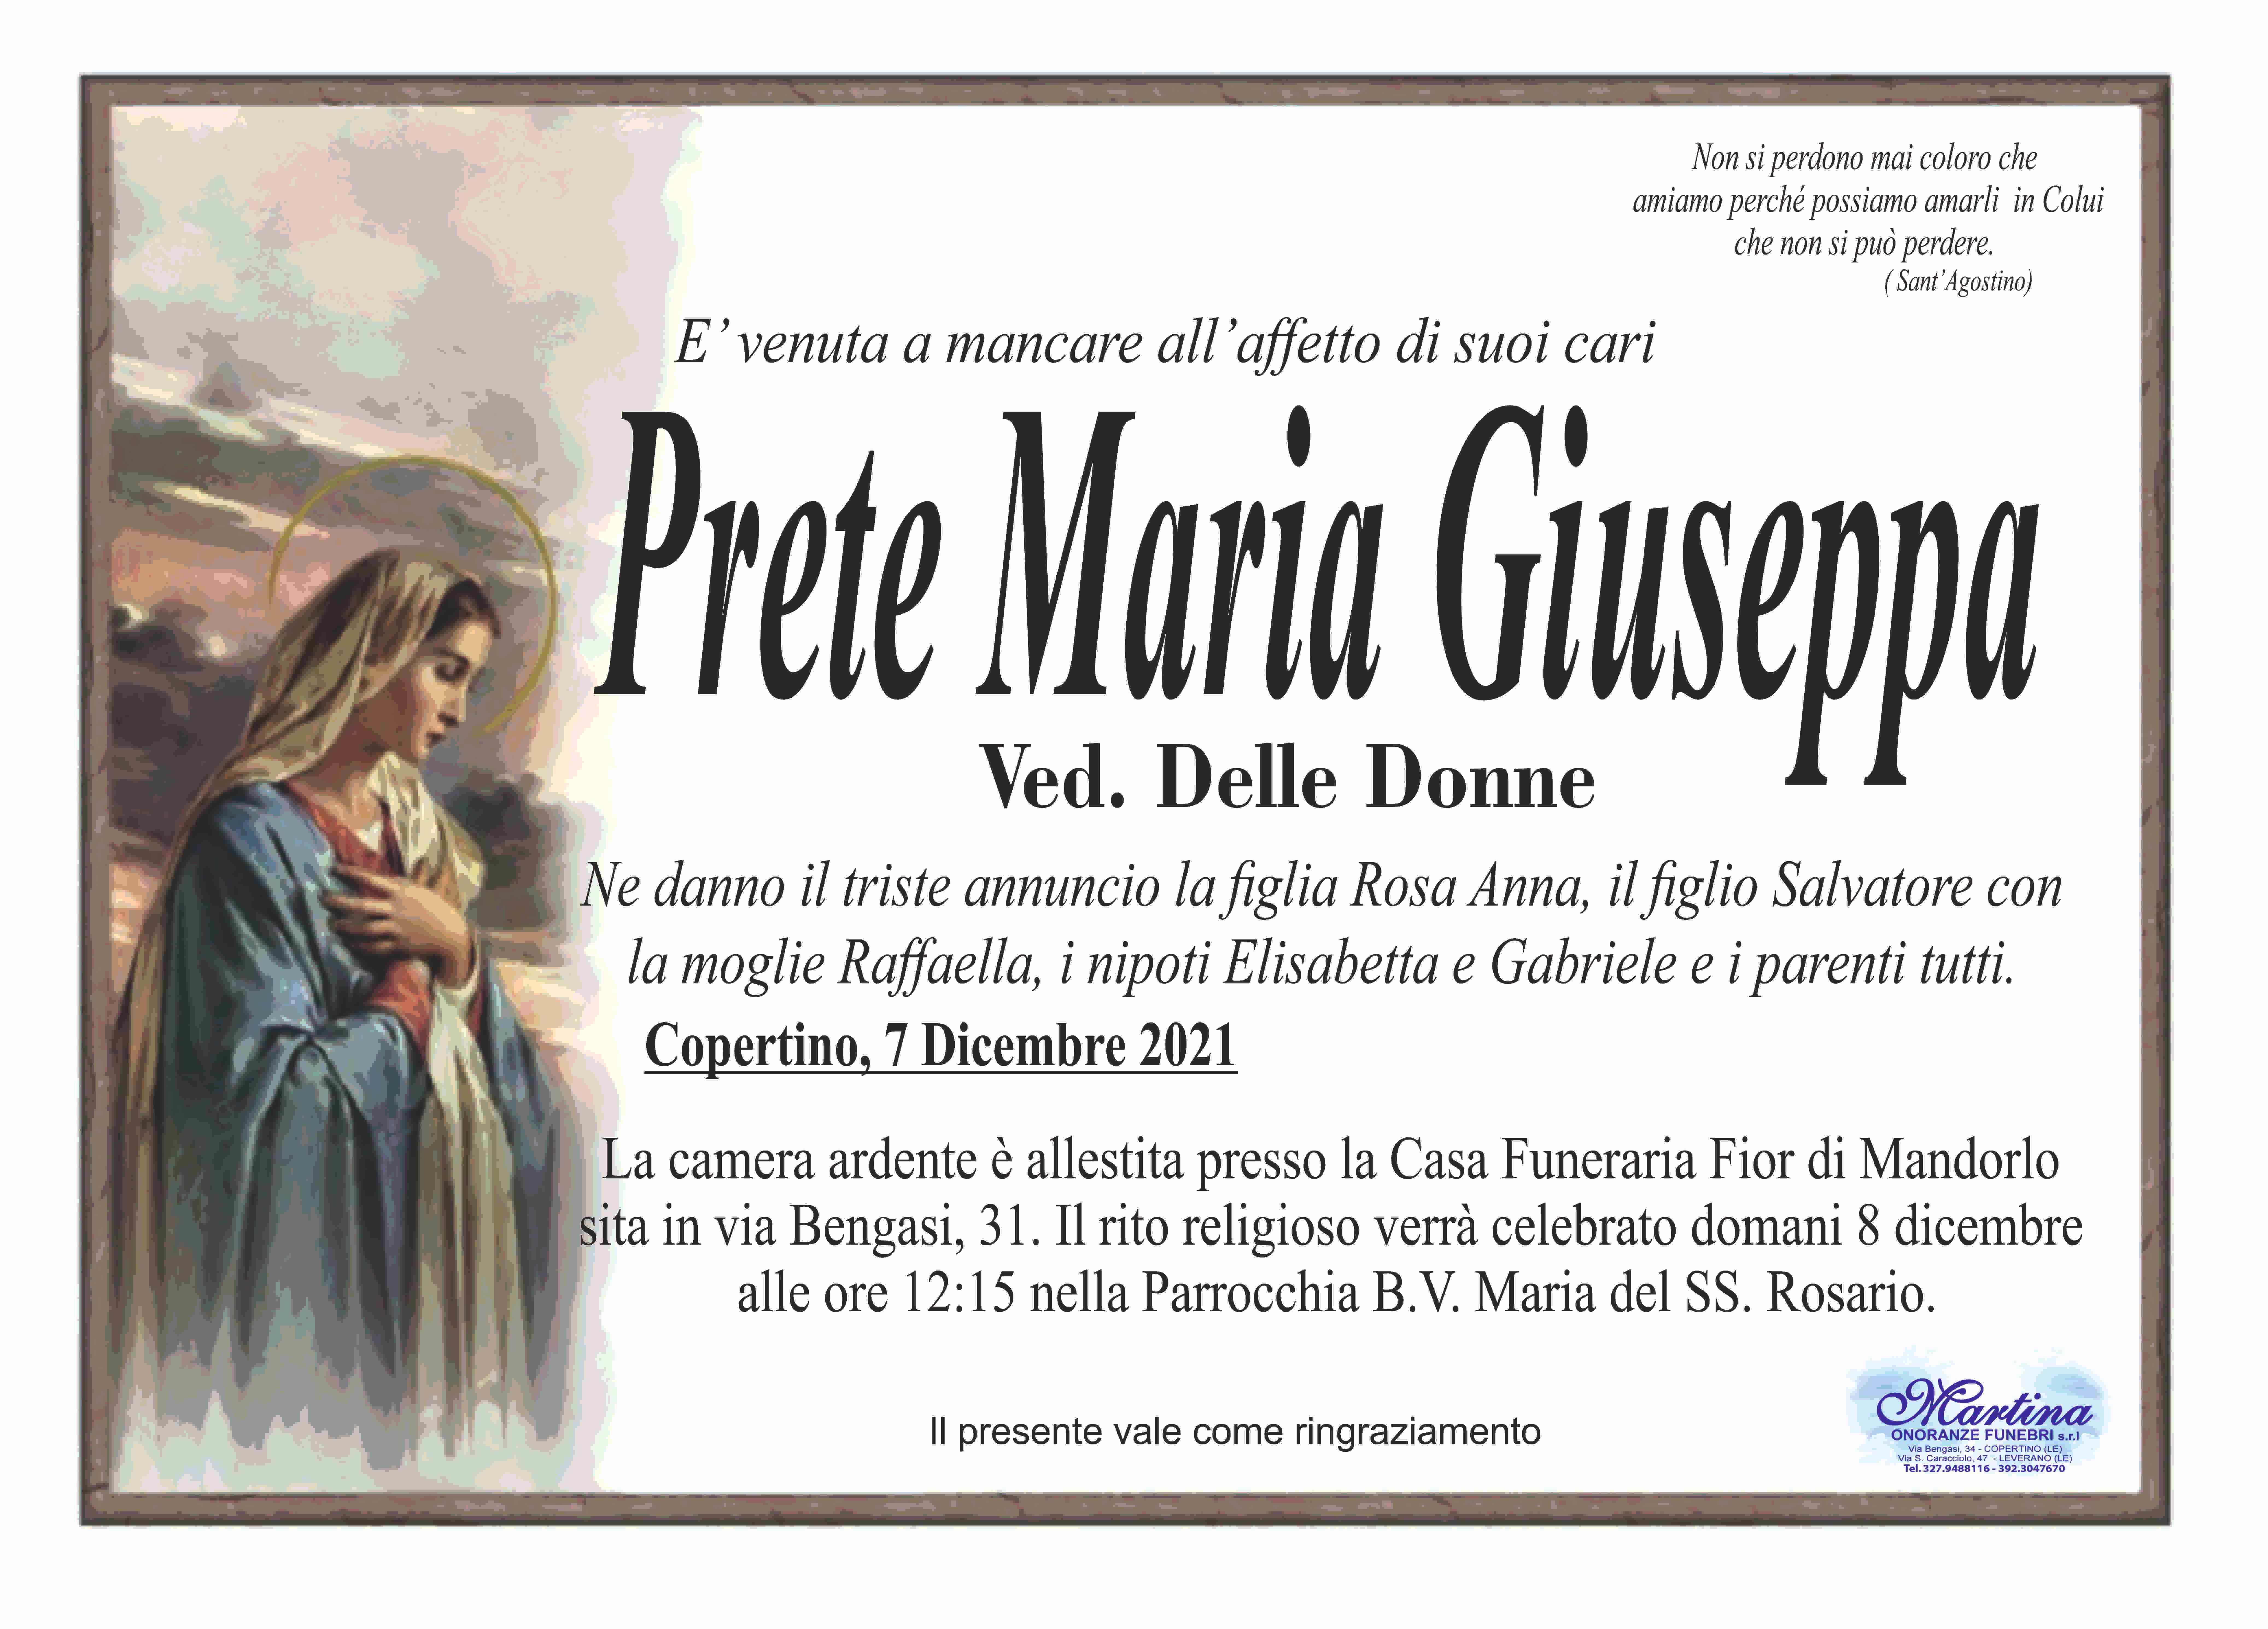 Maria Giuseppa Prete